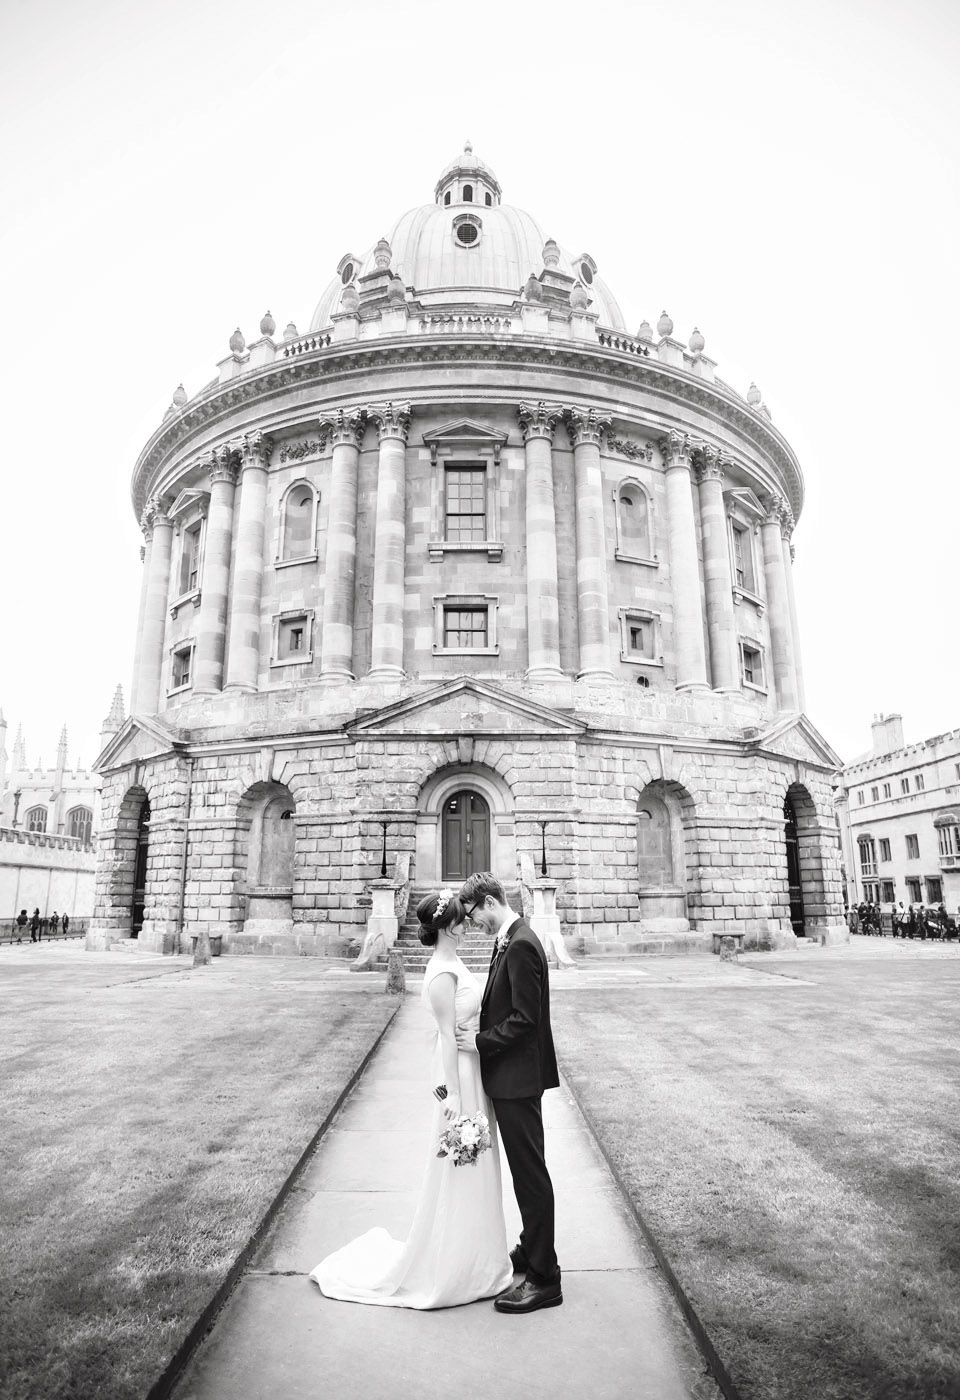 Wedding Photographer, Oxford, UK